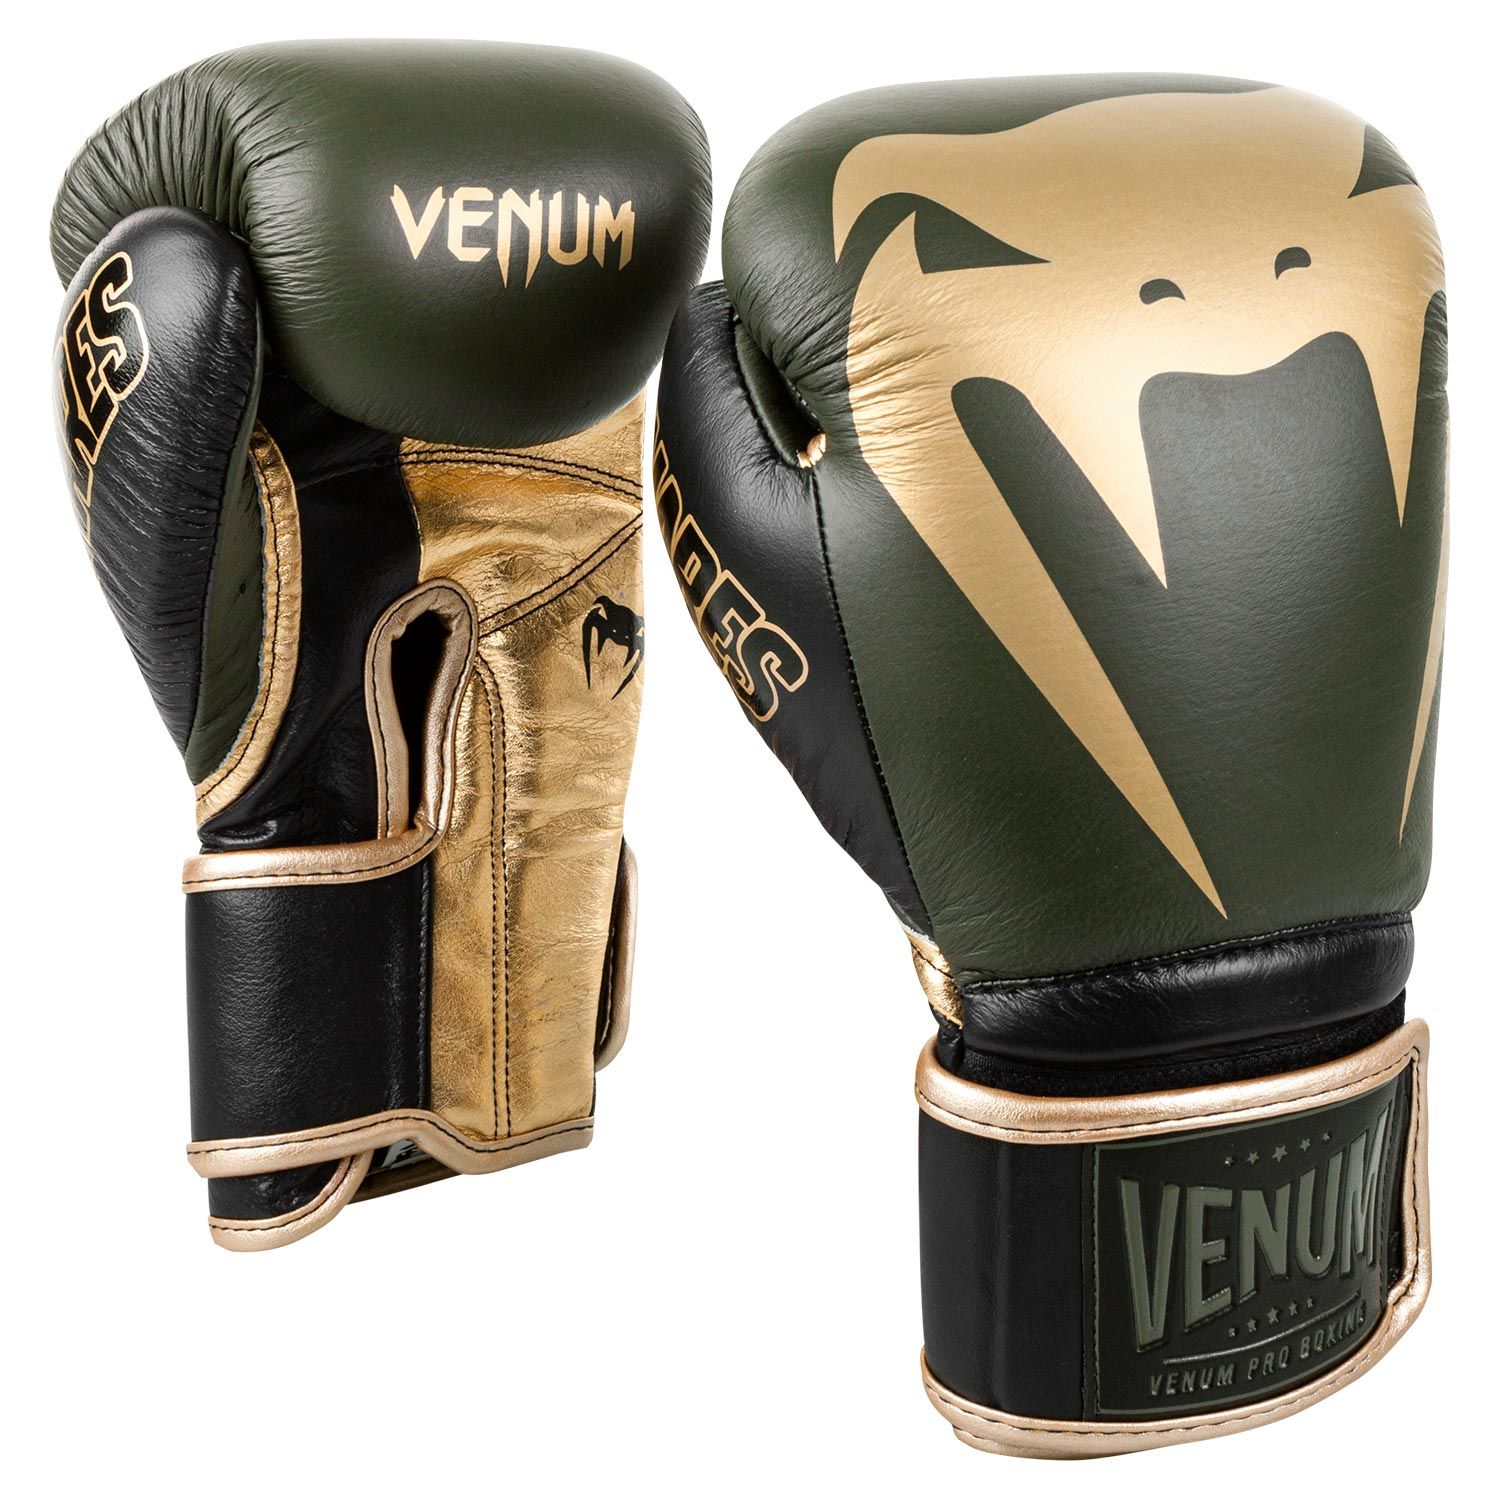 Venum Giant 2.0 Pro Boxhandschuhe Linares Edition - Mit Klettverschluss - Khaki/Schwarz/Gold